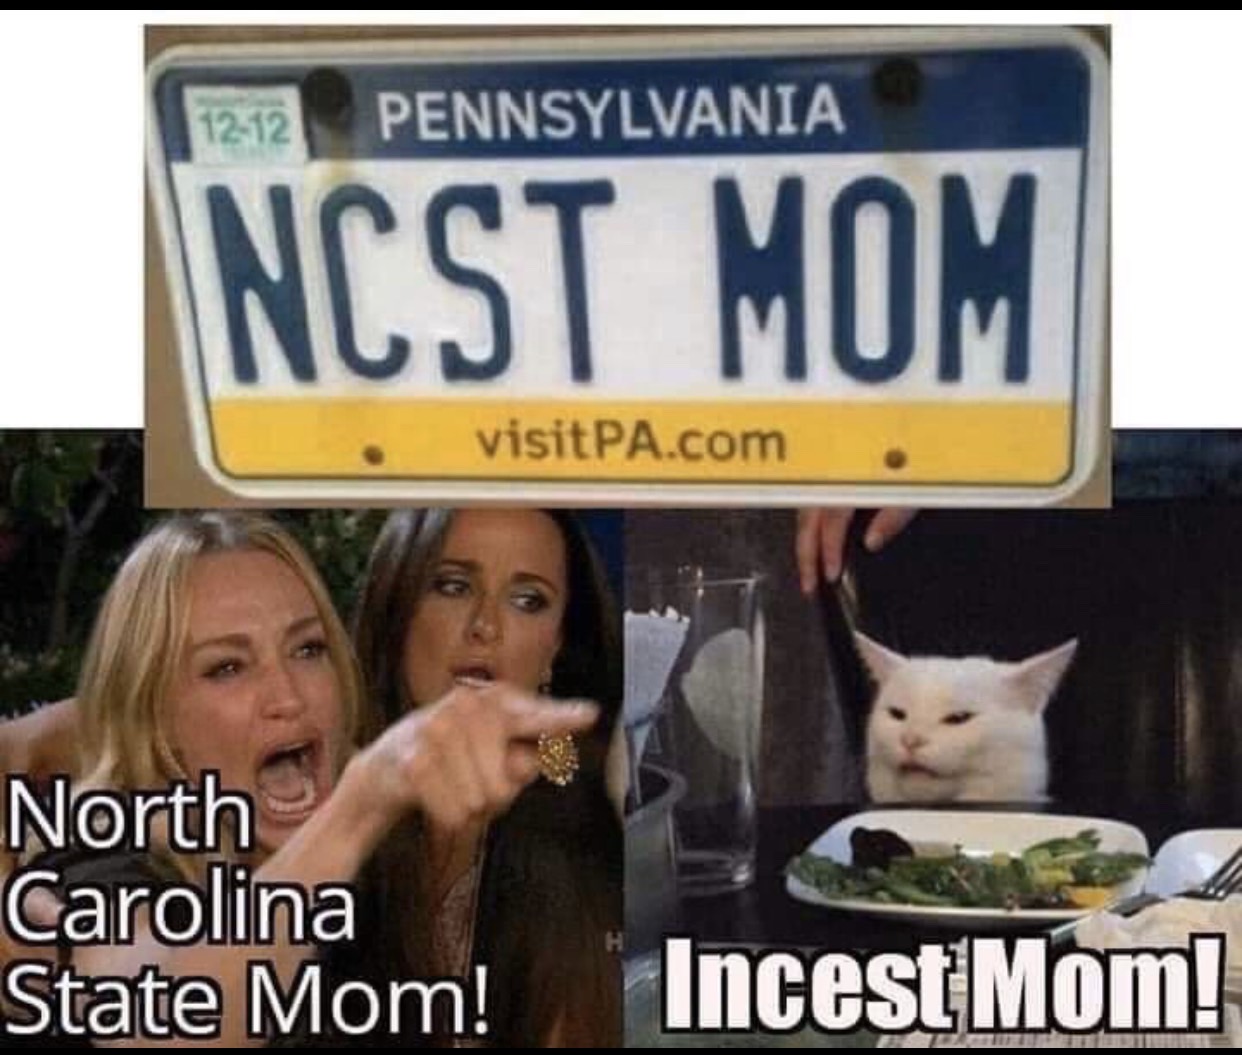 humpday meme - incest mom cat meme - Pennsylvania Ncst Mom visit Pa.com North Carolina State Mom! IncestMom!